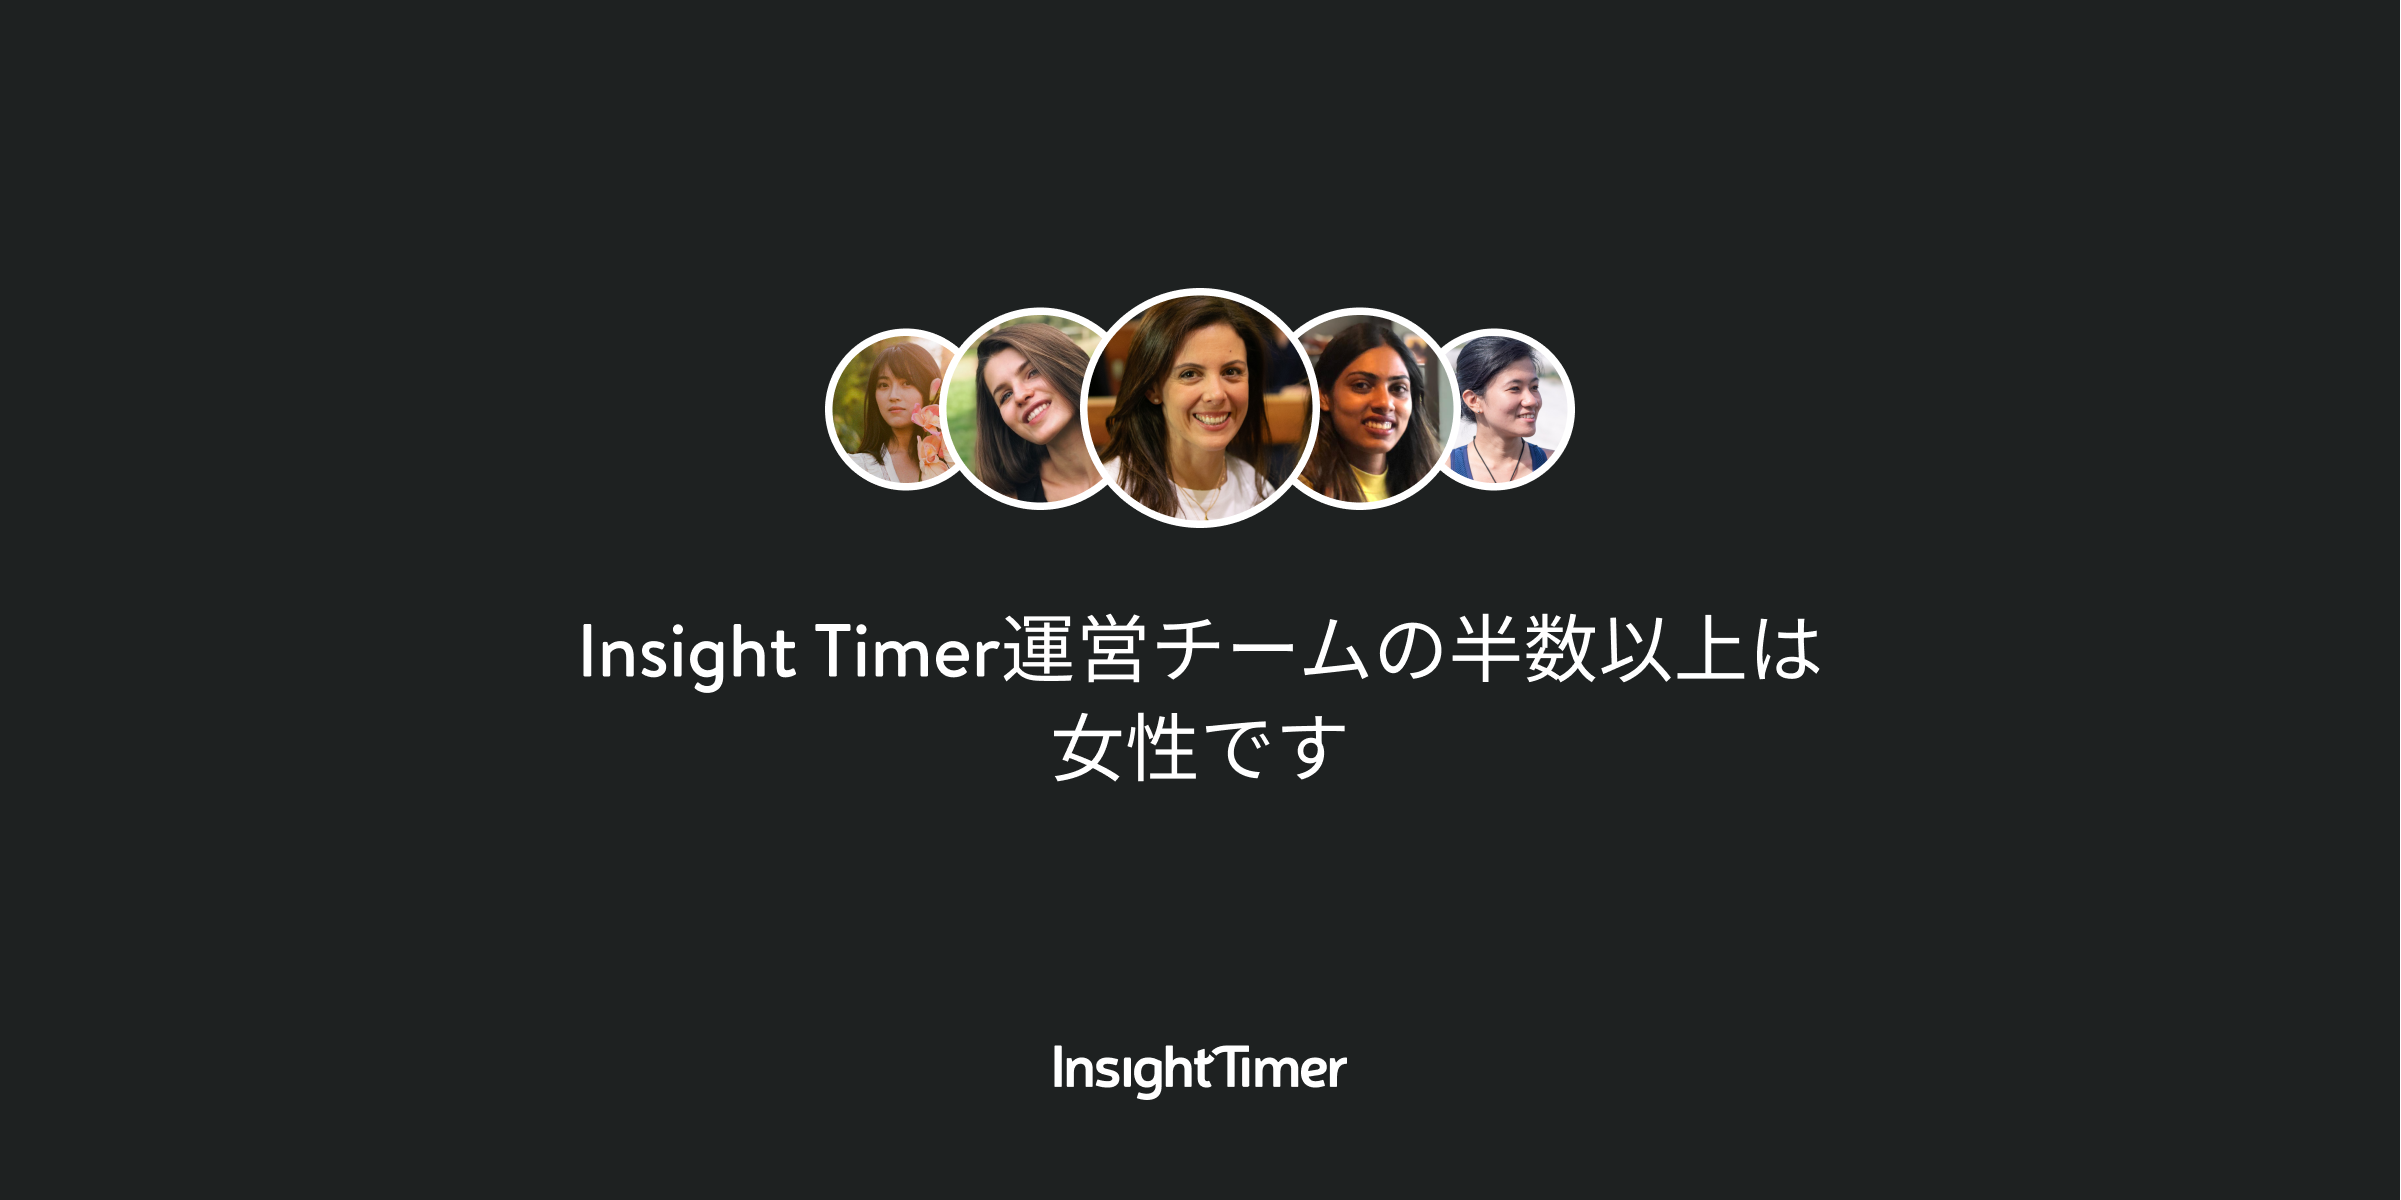 Insight Timer運営チームの半数以上は女性です